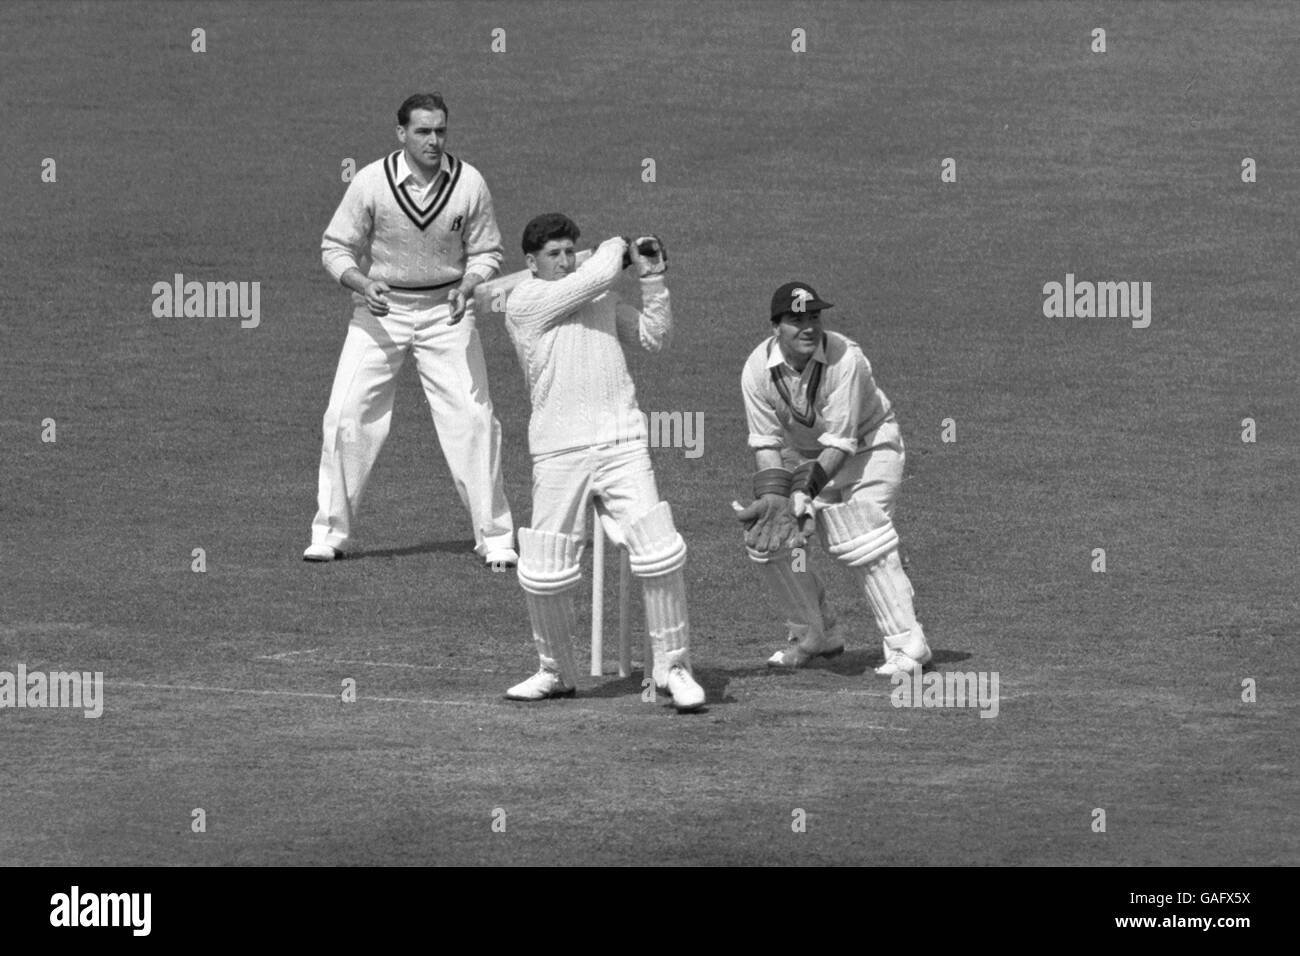 Cricket - Marylebone Cricket Club / Surrey - terzo giorno. Ken Barrington (c) di Surrey colpisce un quattro, guardato dal guardiano MCC Godfrey Evans (r) Foto Stock